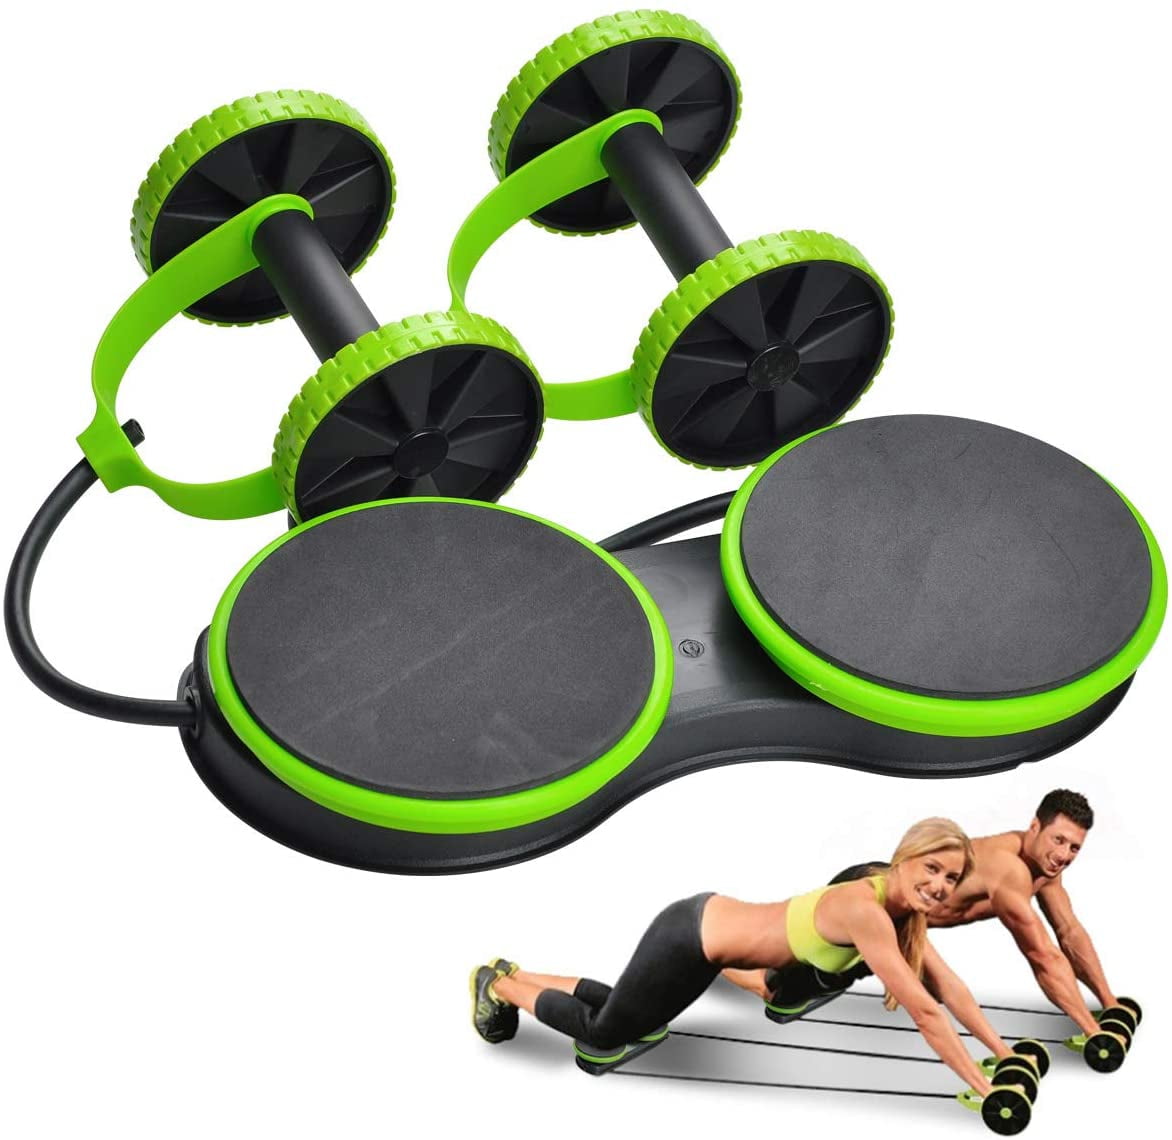 Abdominal Exercisers Body Training Waist Gym Equipment Fitness Roller AB Wheel 